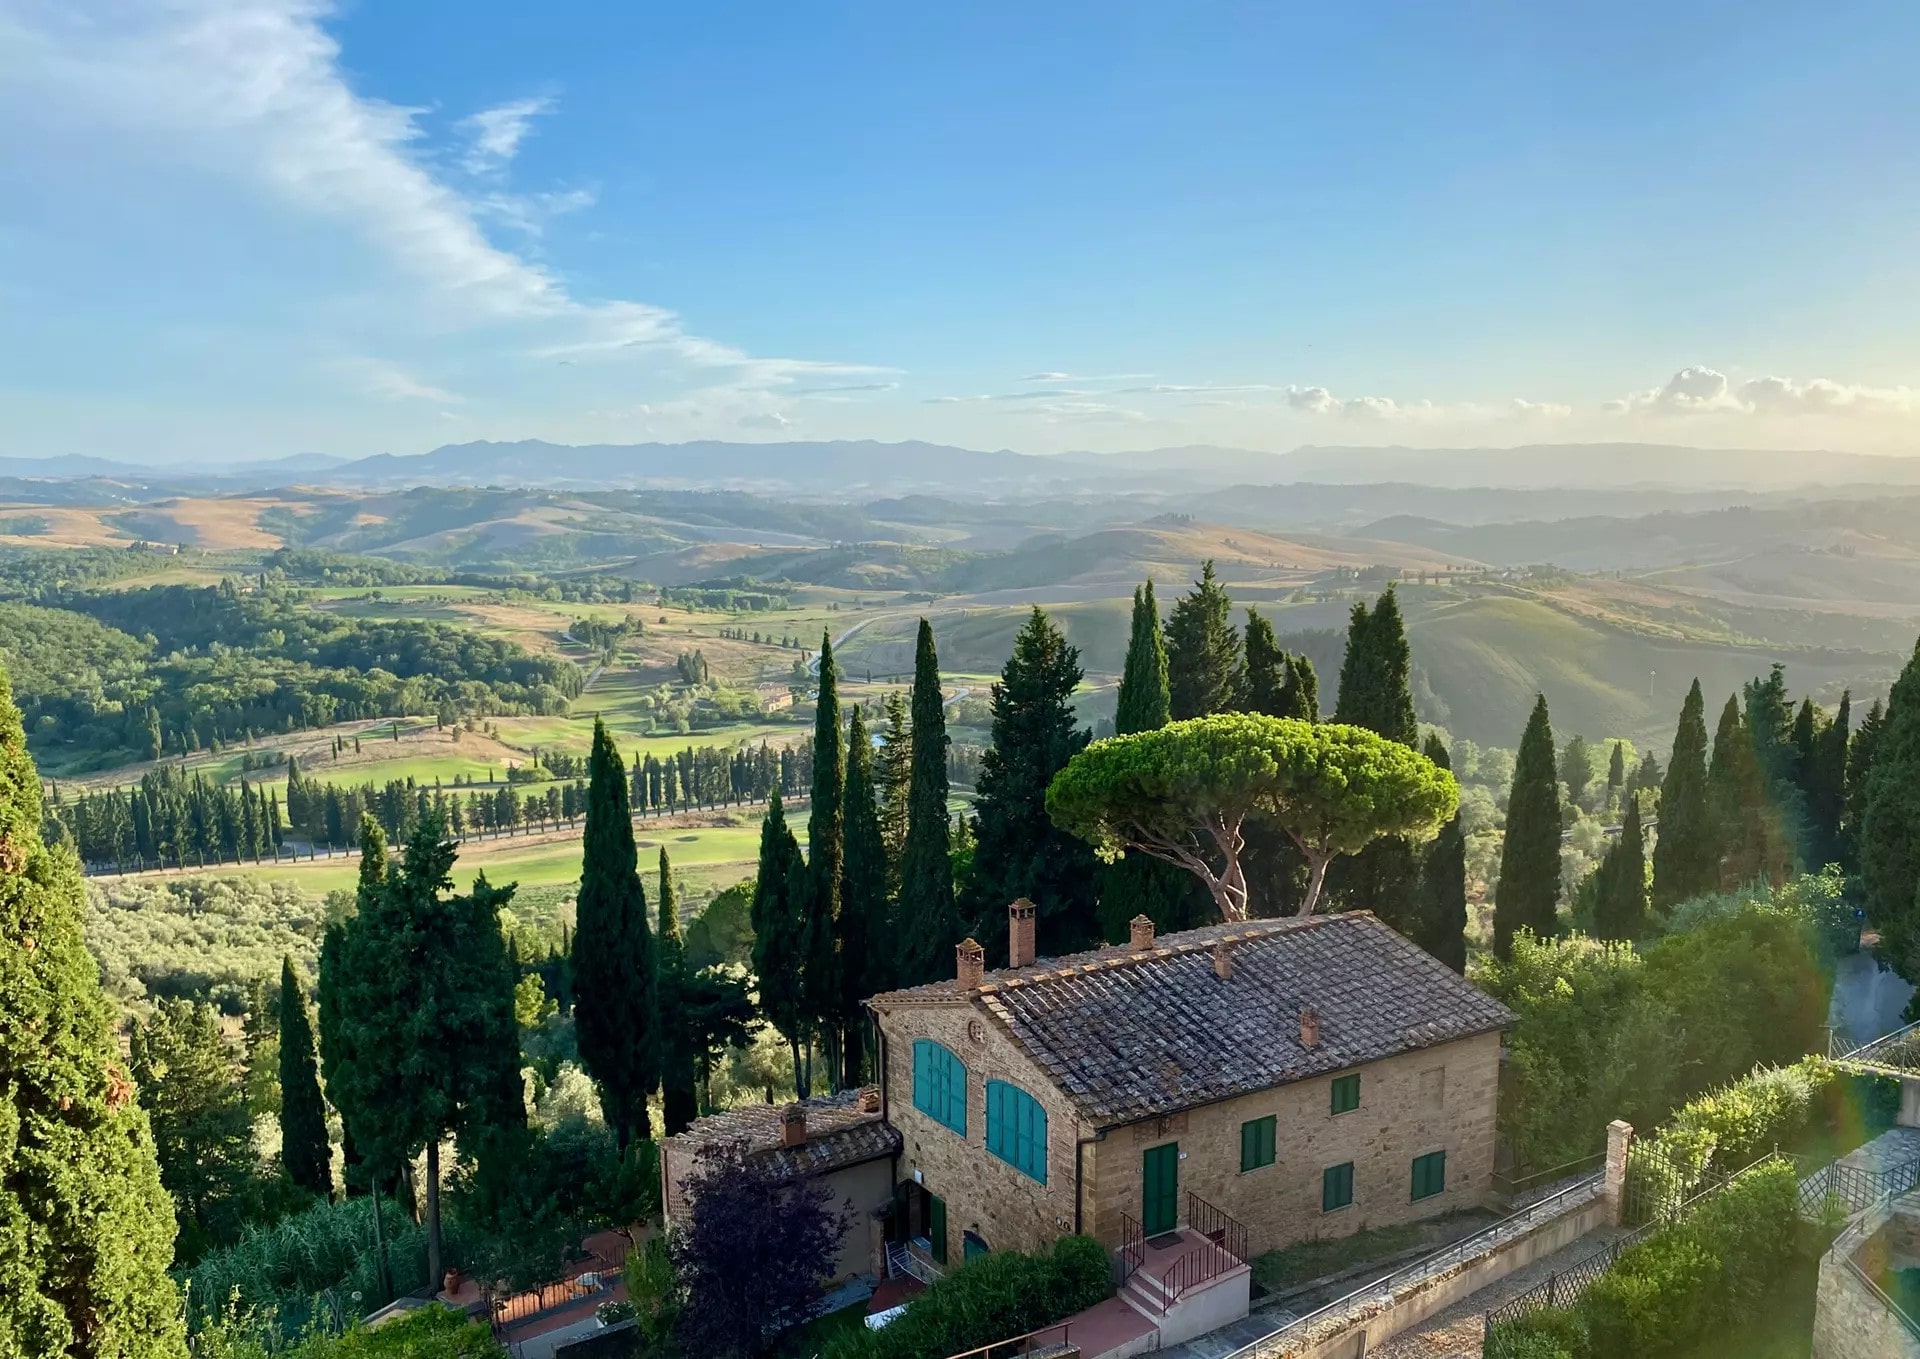 image of a Tuscan landscape